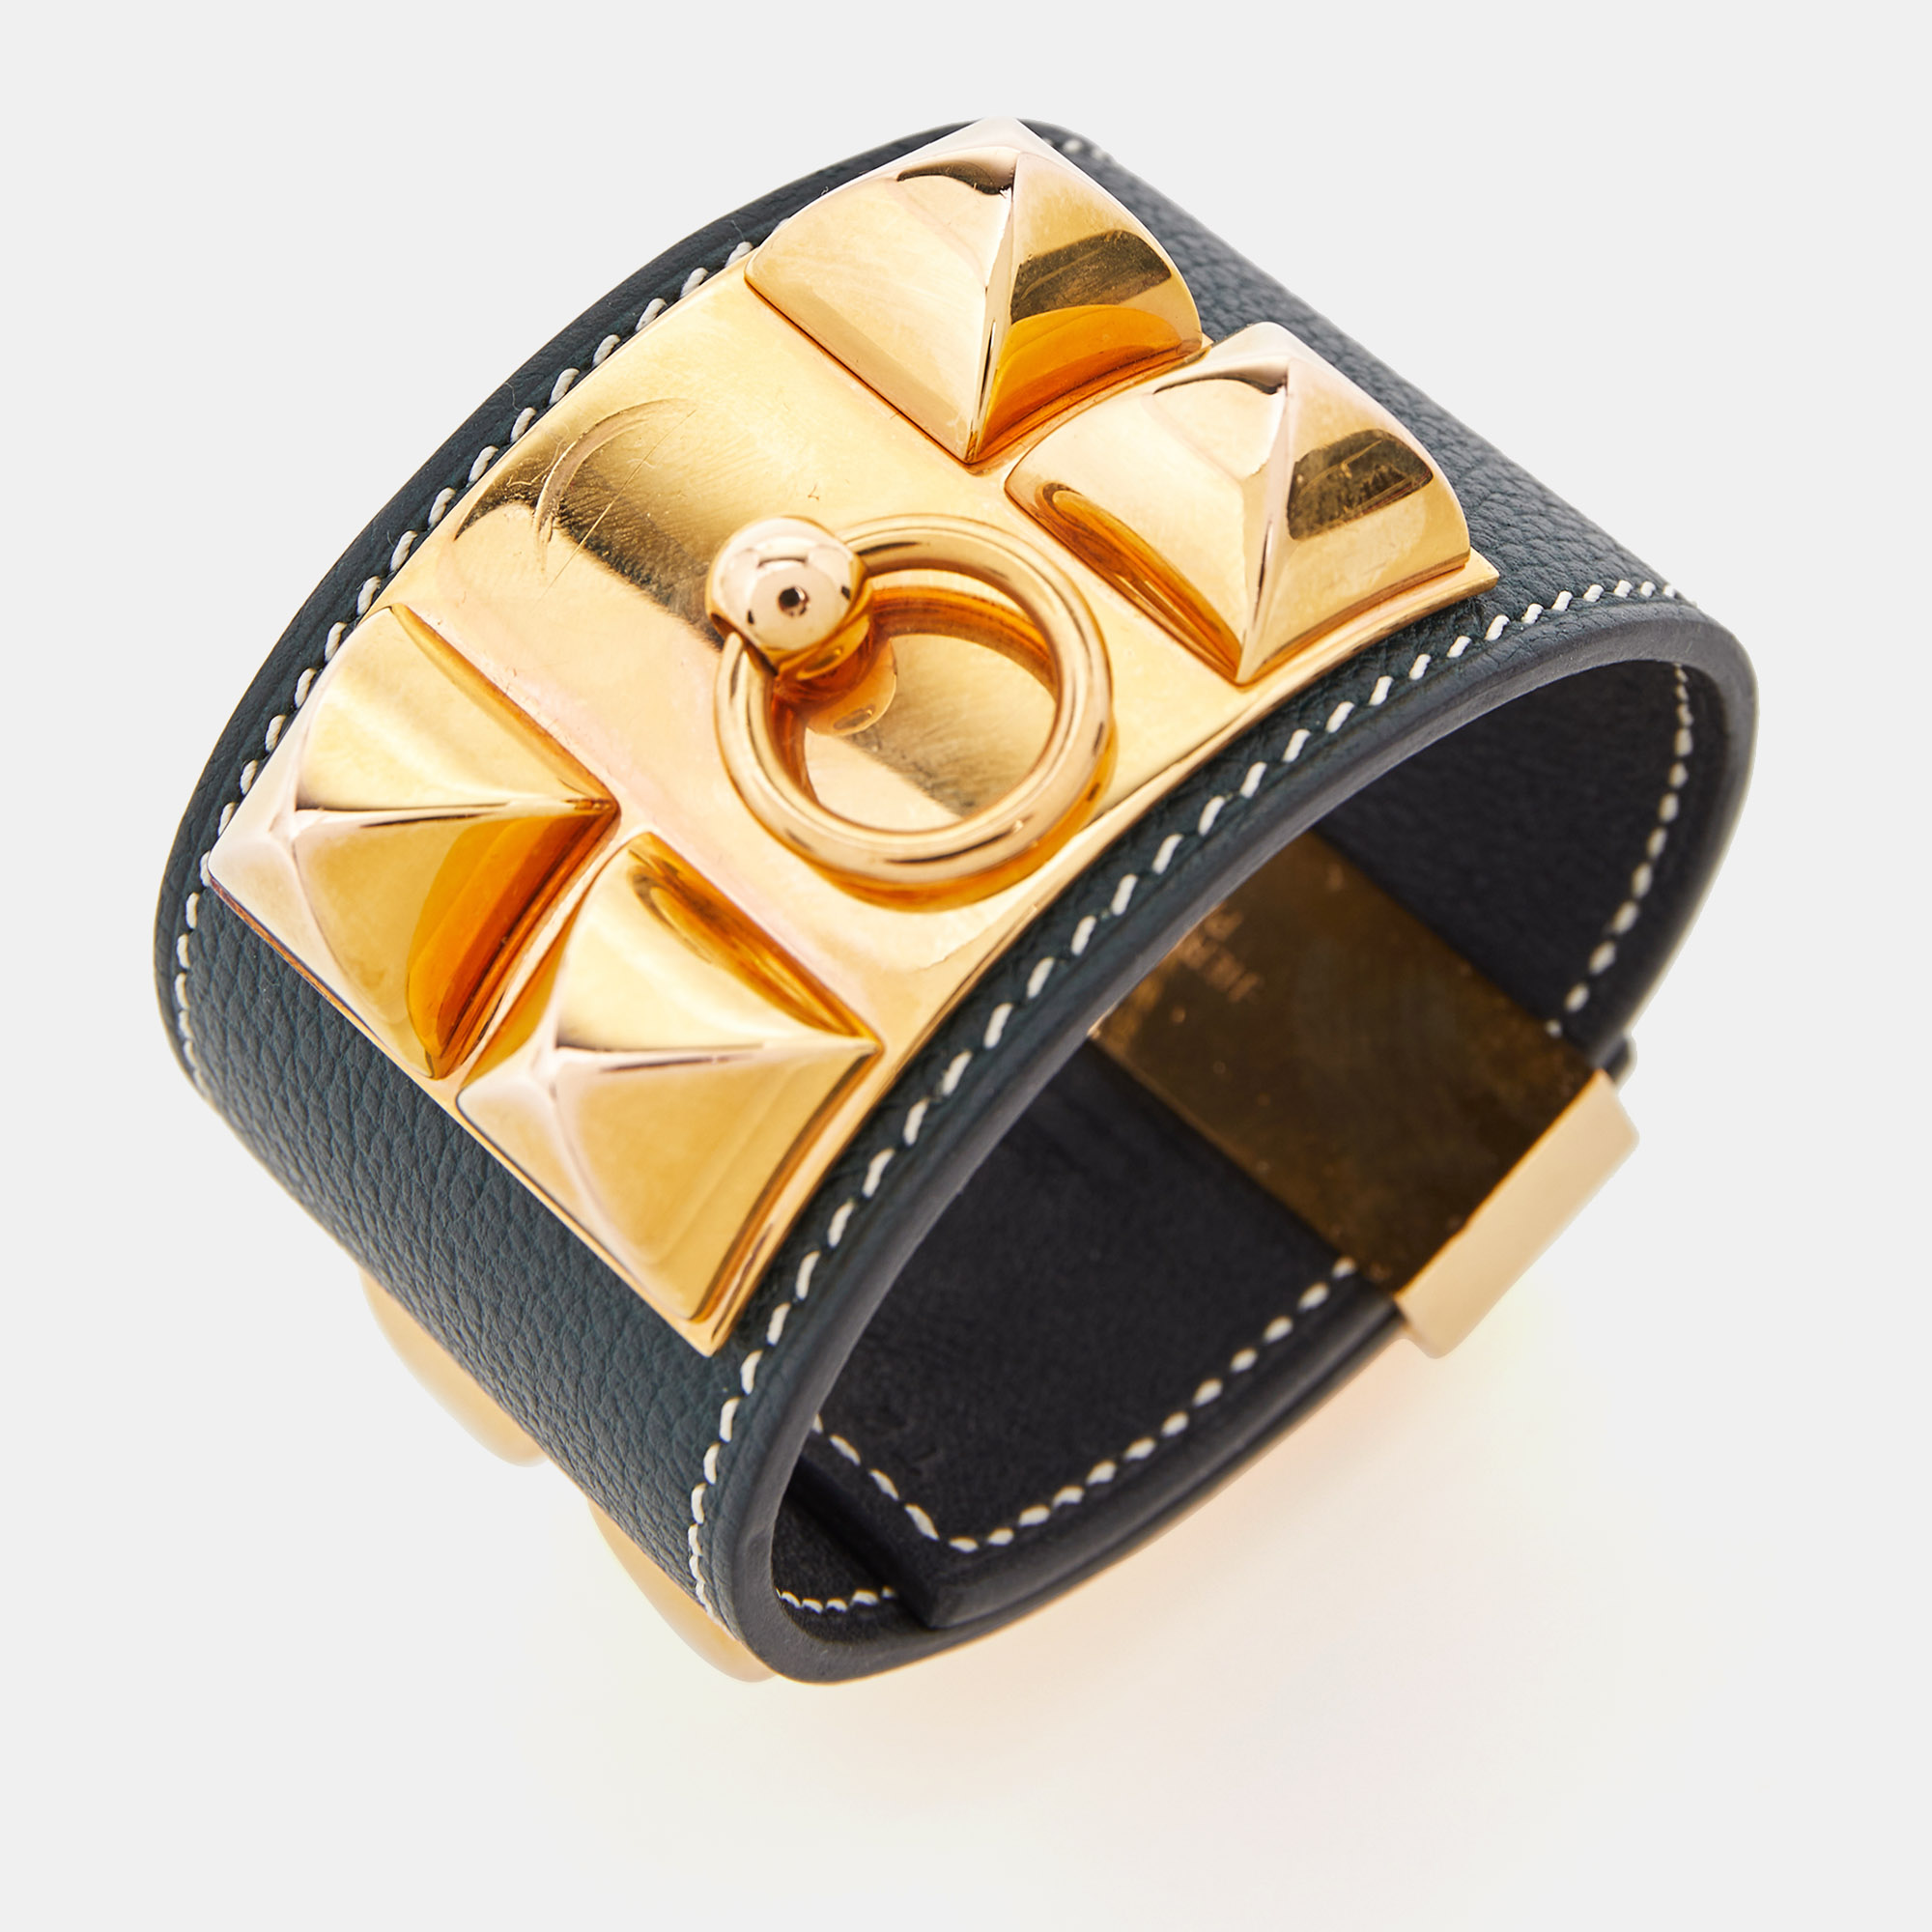 

Hermes Collier de Chien Leather Gold Plated Cuff Bracelet